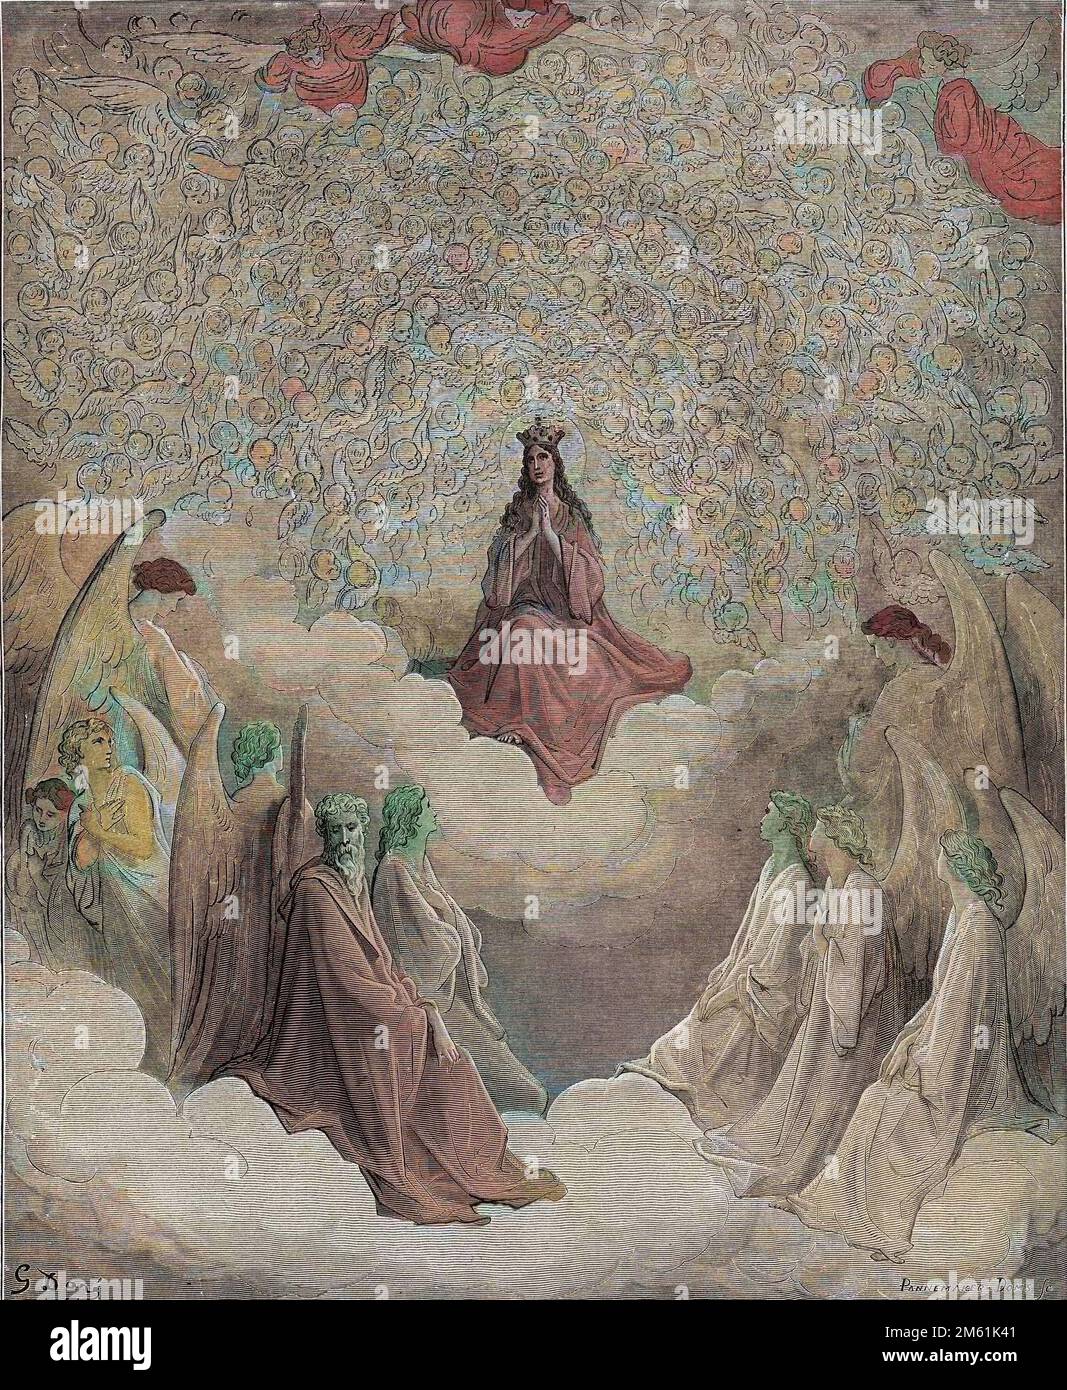 The Divine Comedy by Dante Alighieri , Paradiso, Canto 31 : The queen of heaven - by  Dante Alighieri (1265-1321) - Illustration de Gustave Dore (1832-1883), 1885 - Colorisation digitale d'apres l'originale - digitally coloured engraving Stock Photo